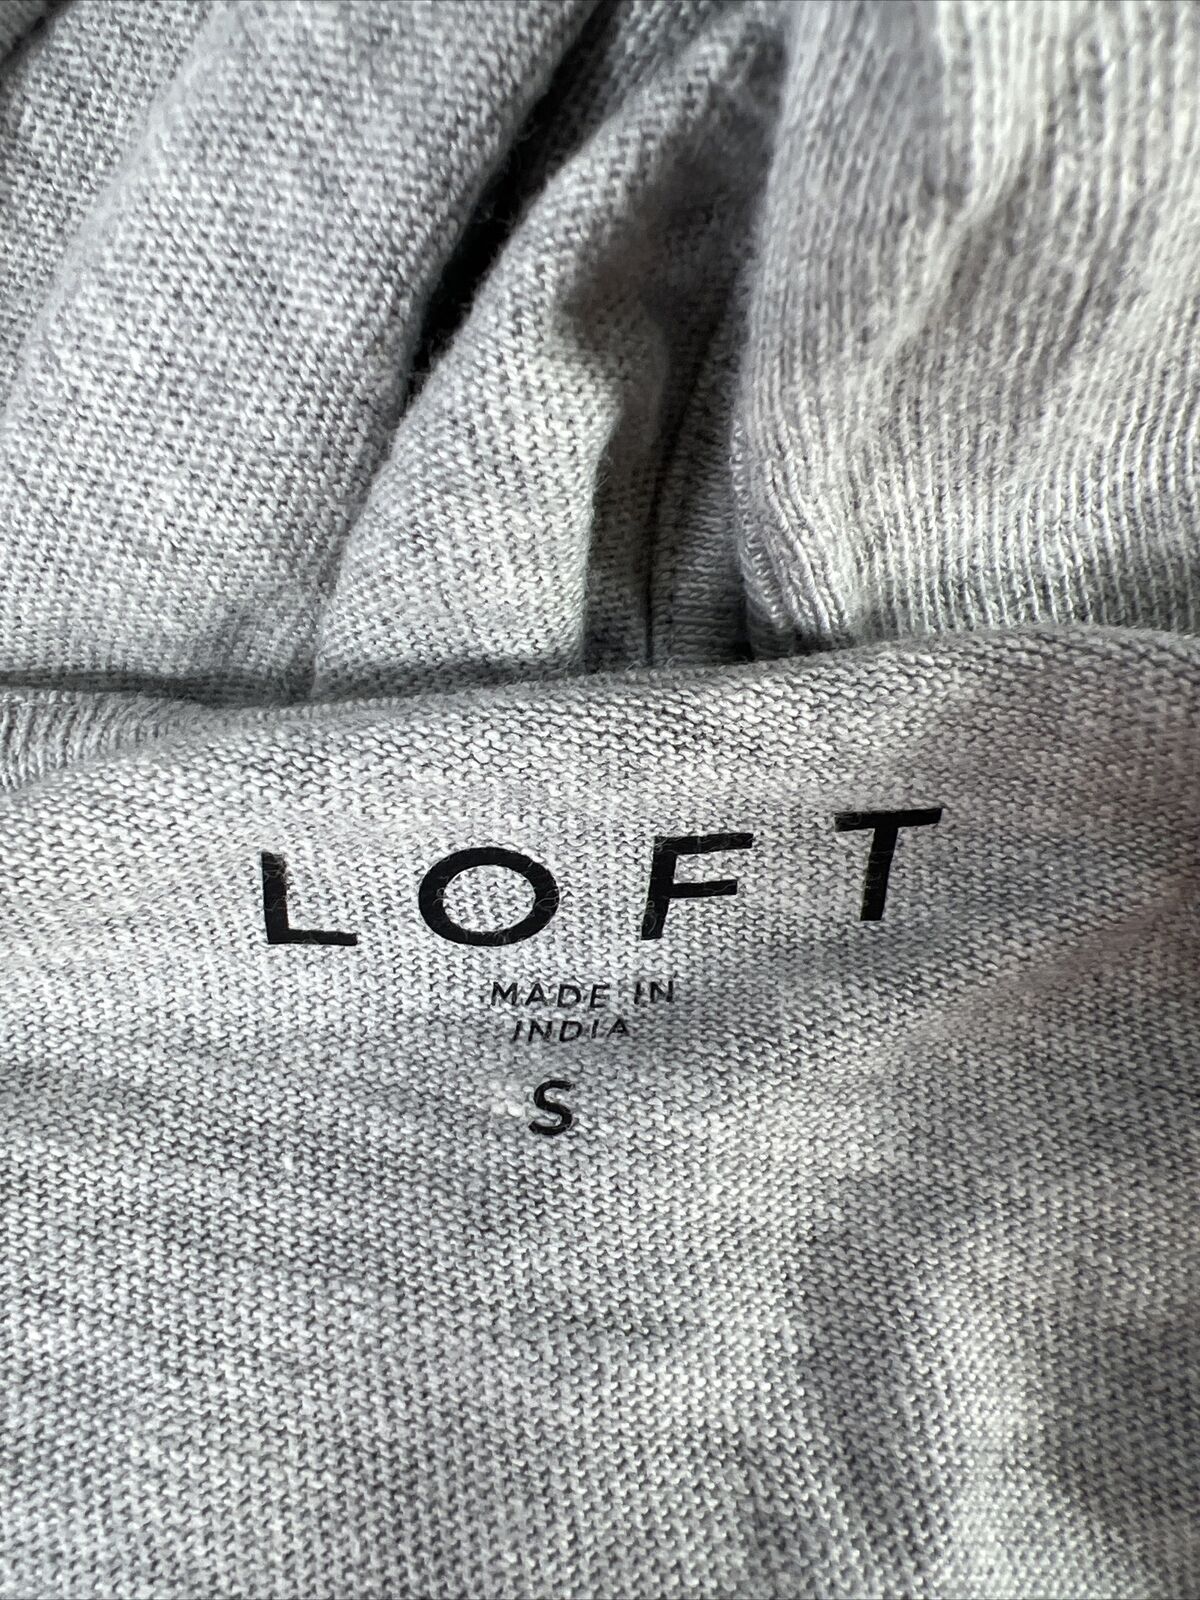 NEW LOFT Camisa gris con capucha de punto fino de manga larga para mujer - S